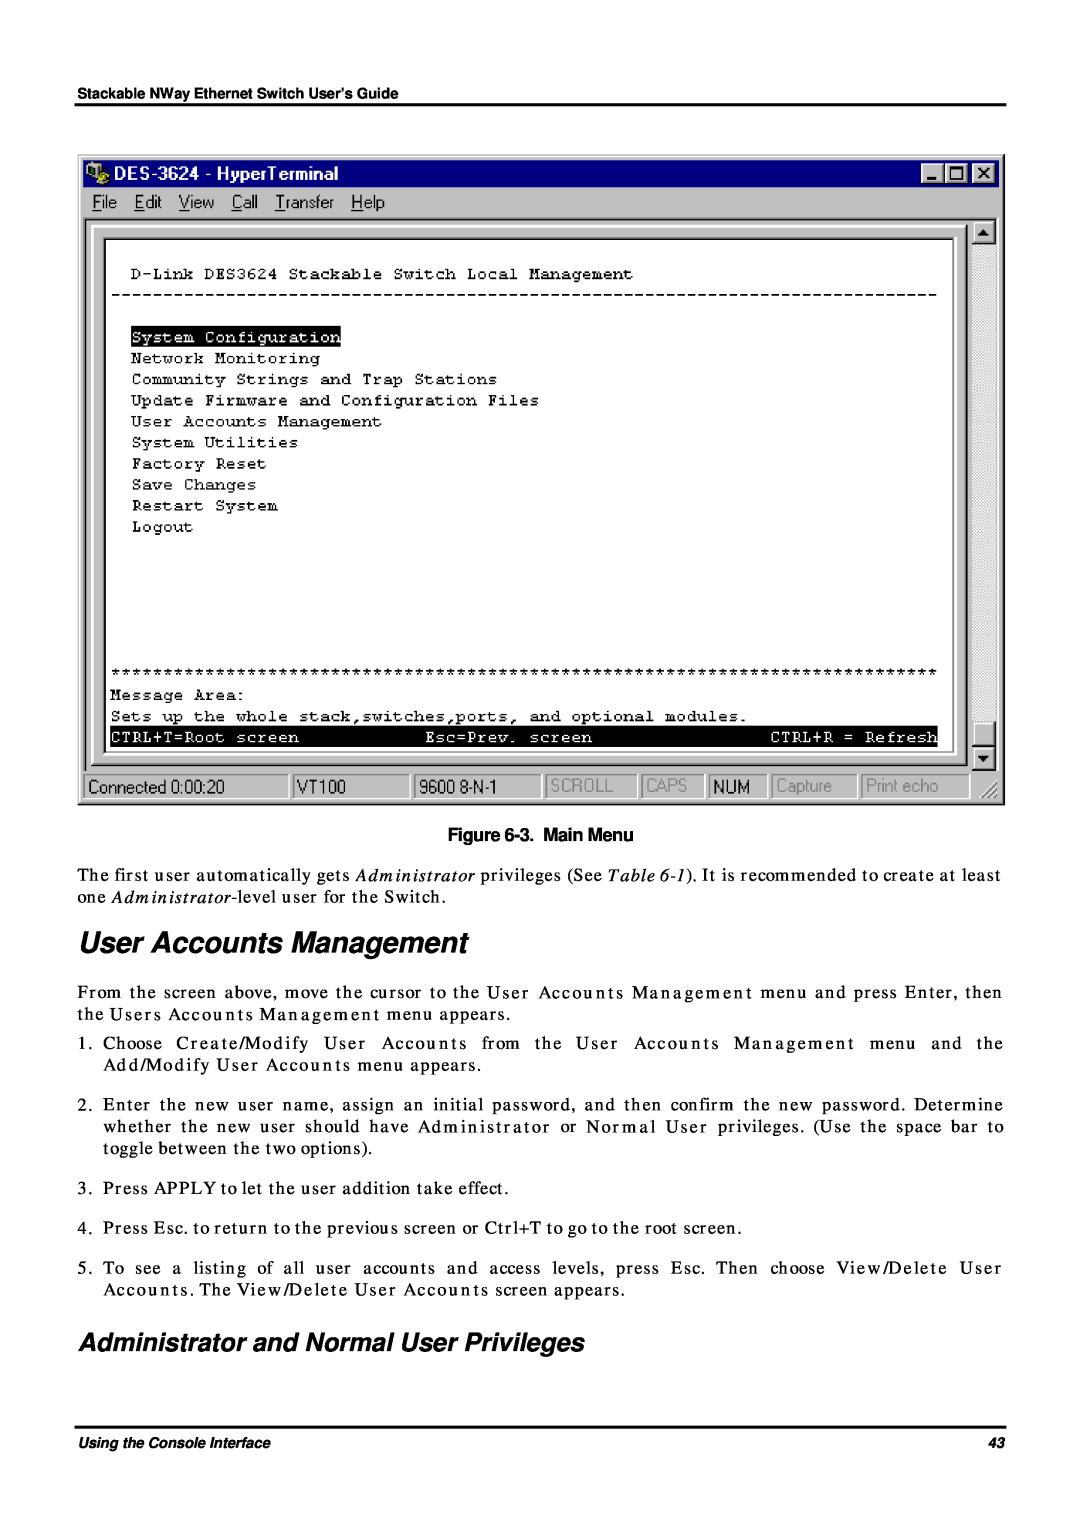 D-Link DES-3624 manual User Accounts Management, 3. Main Menu, Administrator and Normal User Privileges 